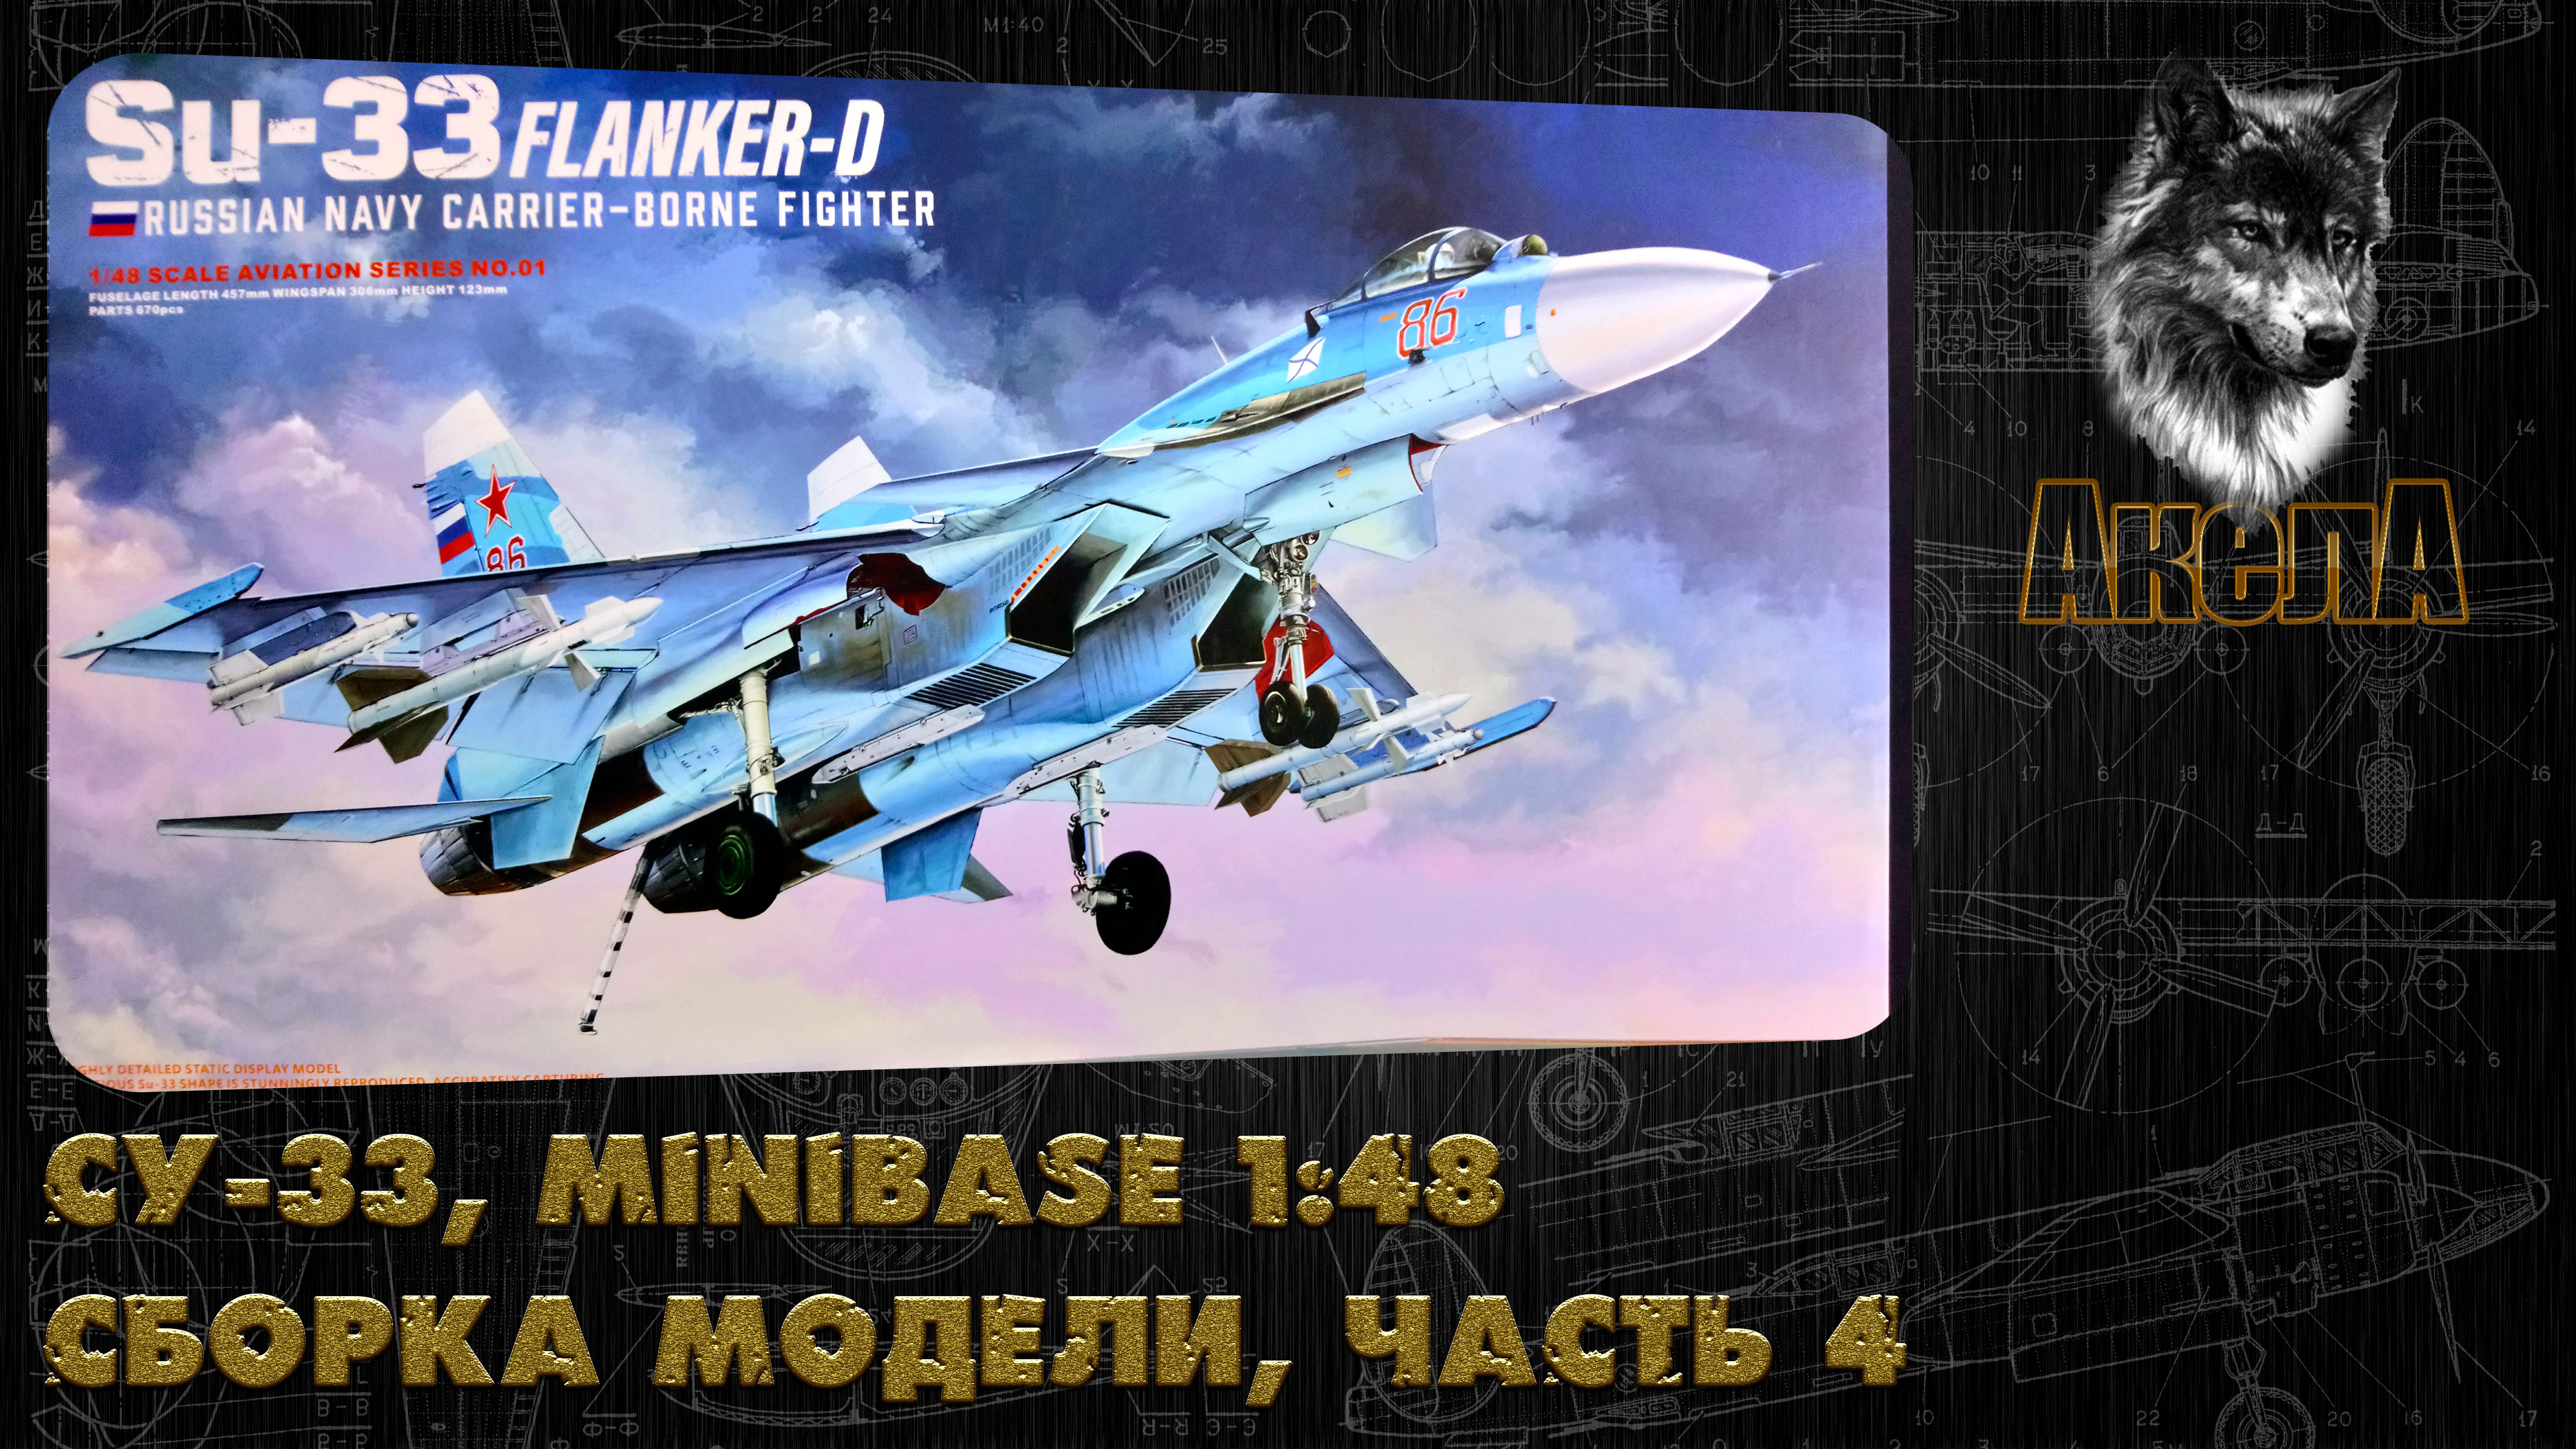 Су-33, Minibase 1/48, сборка модели, часть 4